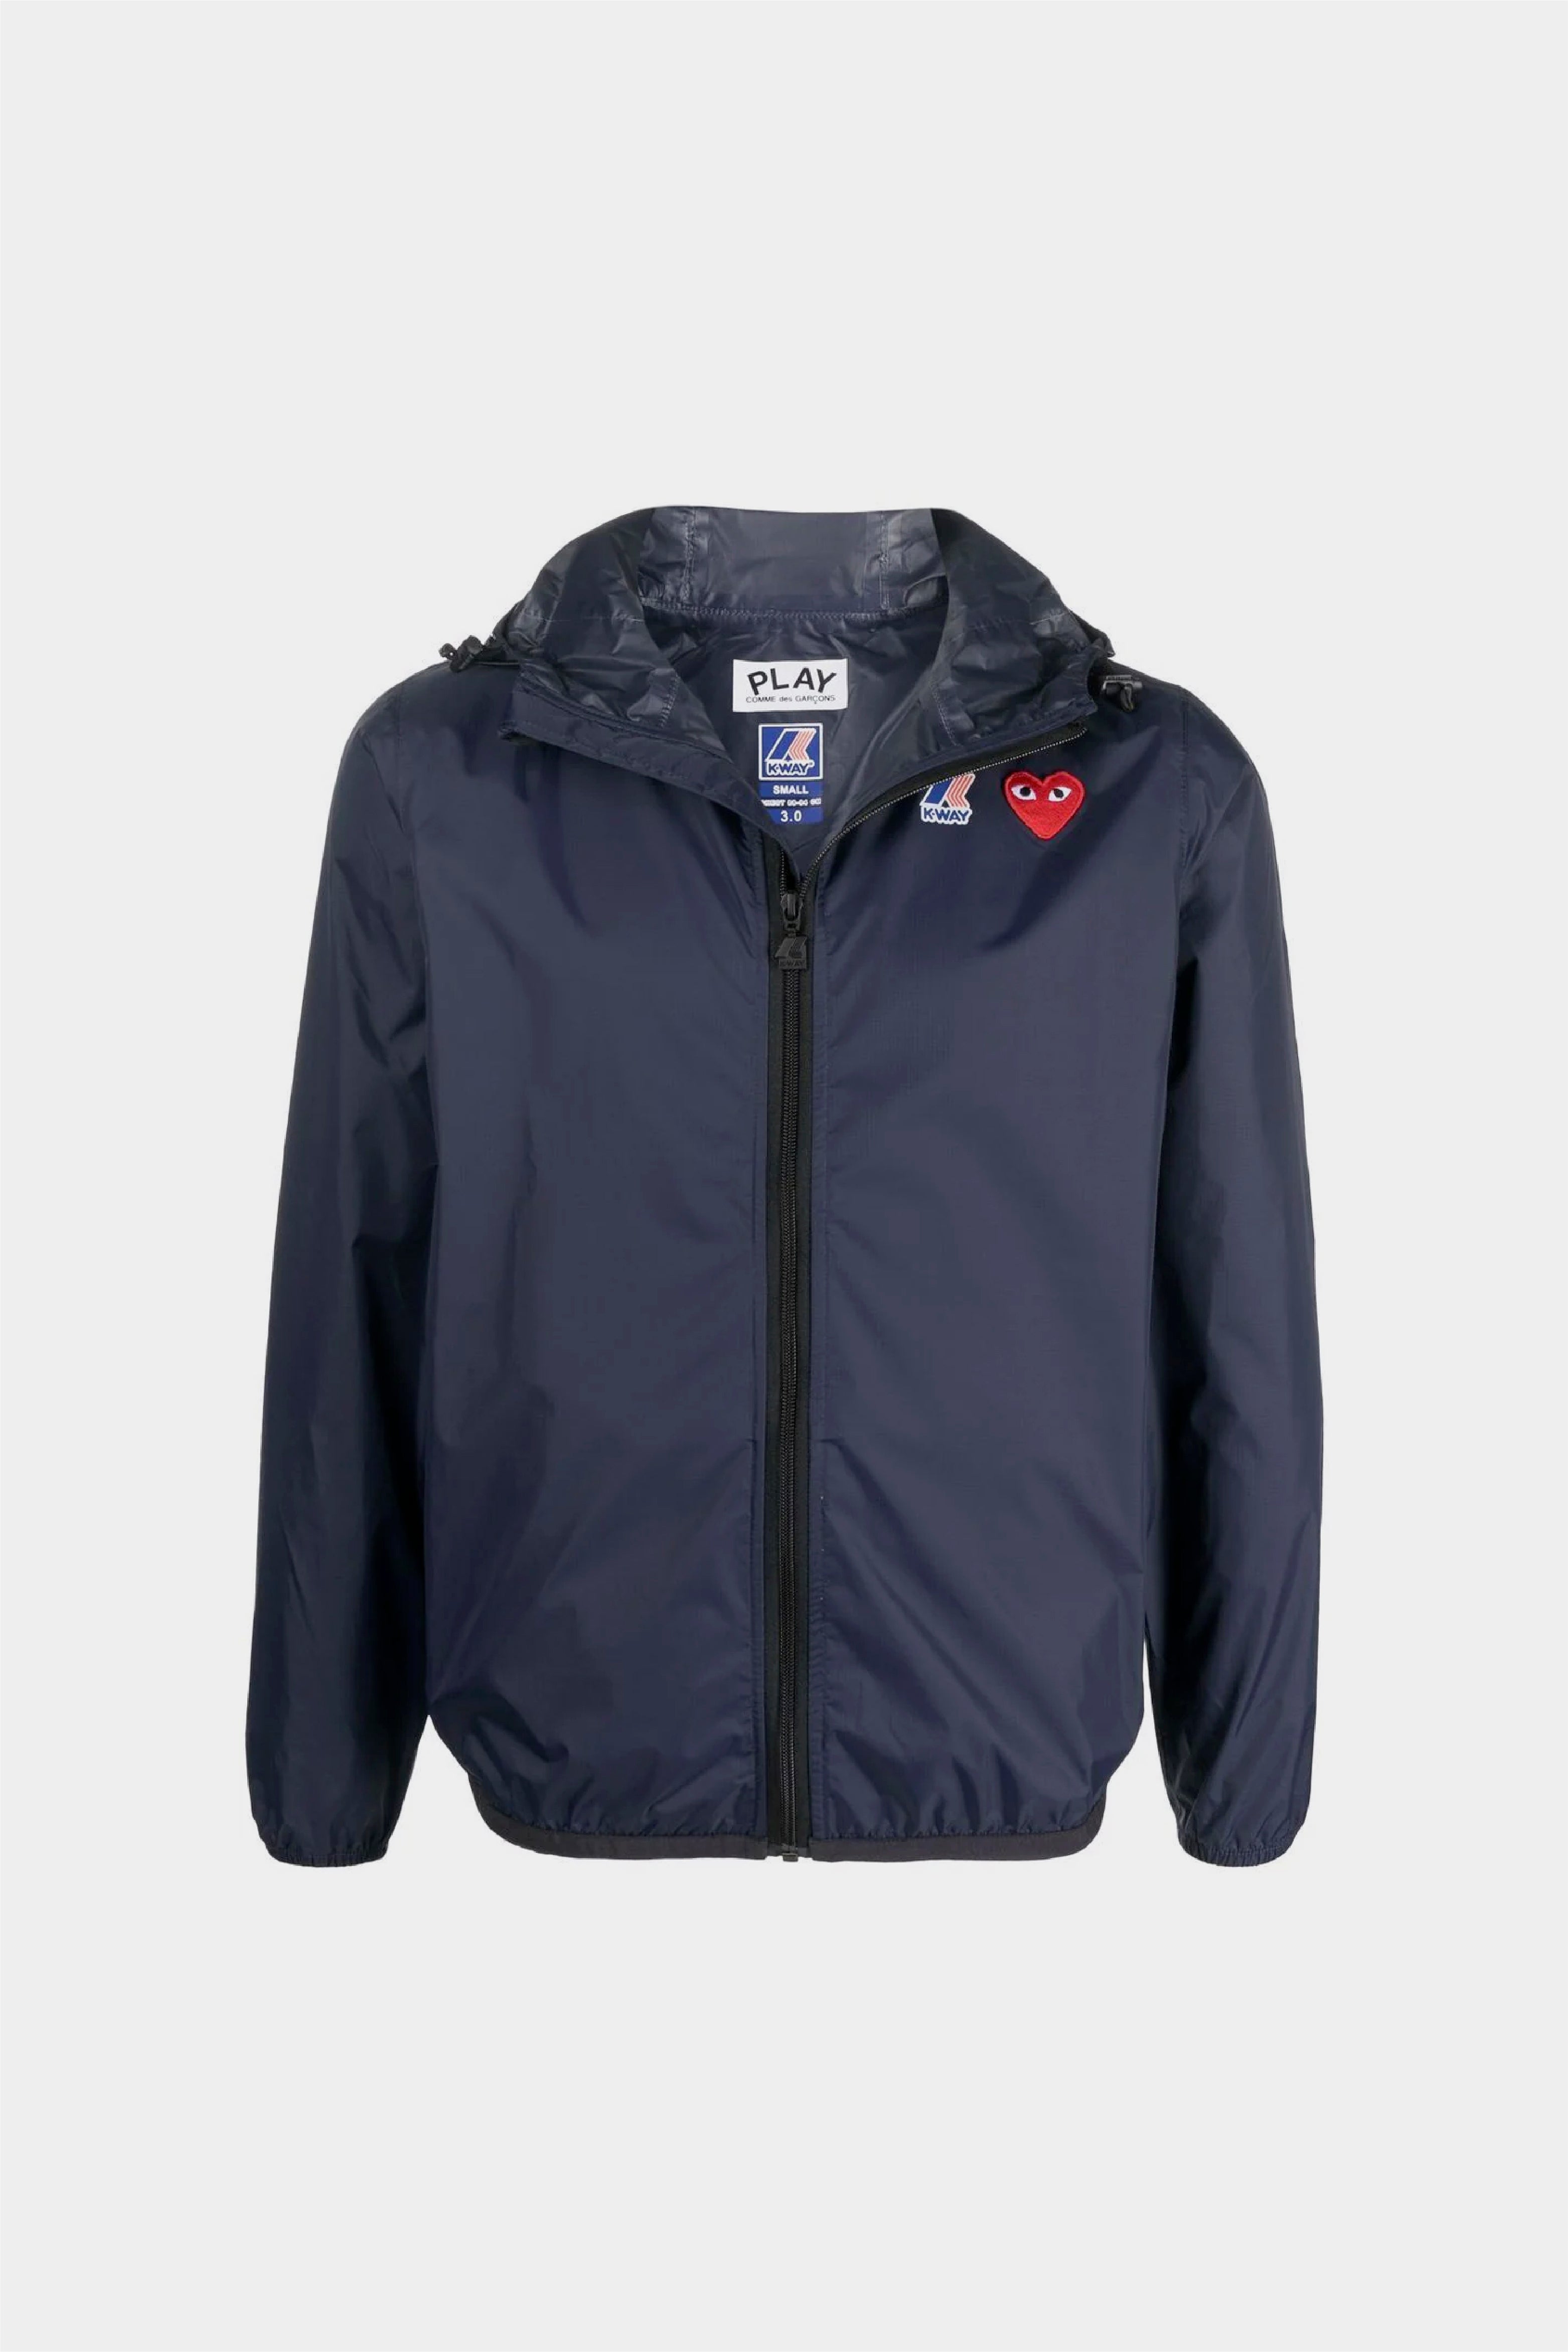 Selectshop FRAME - COMME DES GARCONS PLAY x K-Way zip hooded jacket Outerwear Dubai